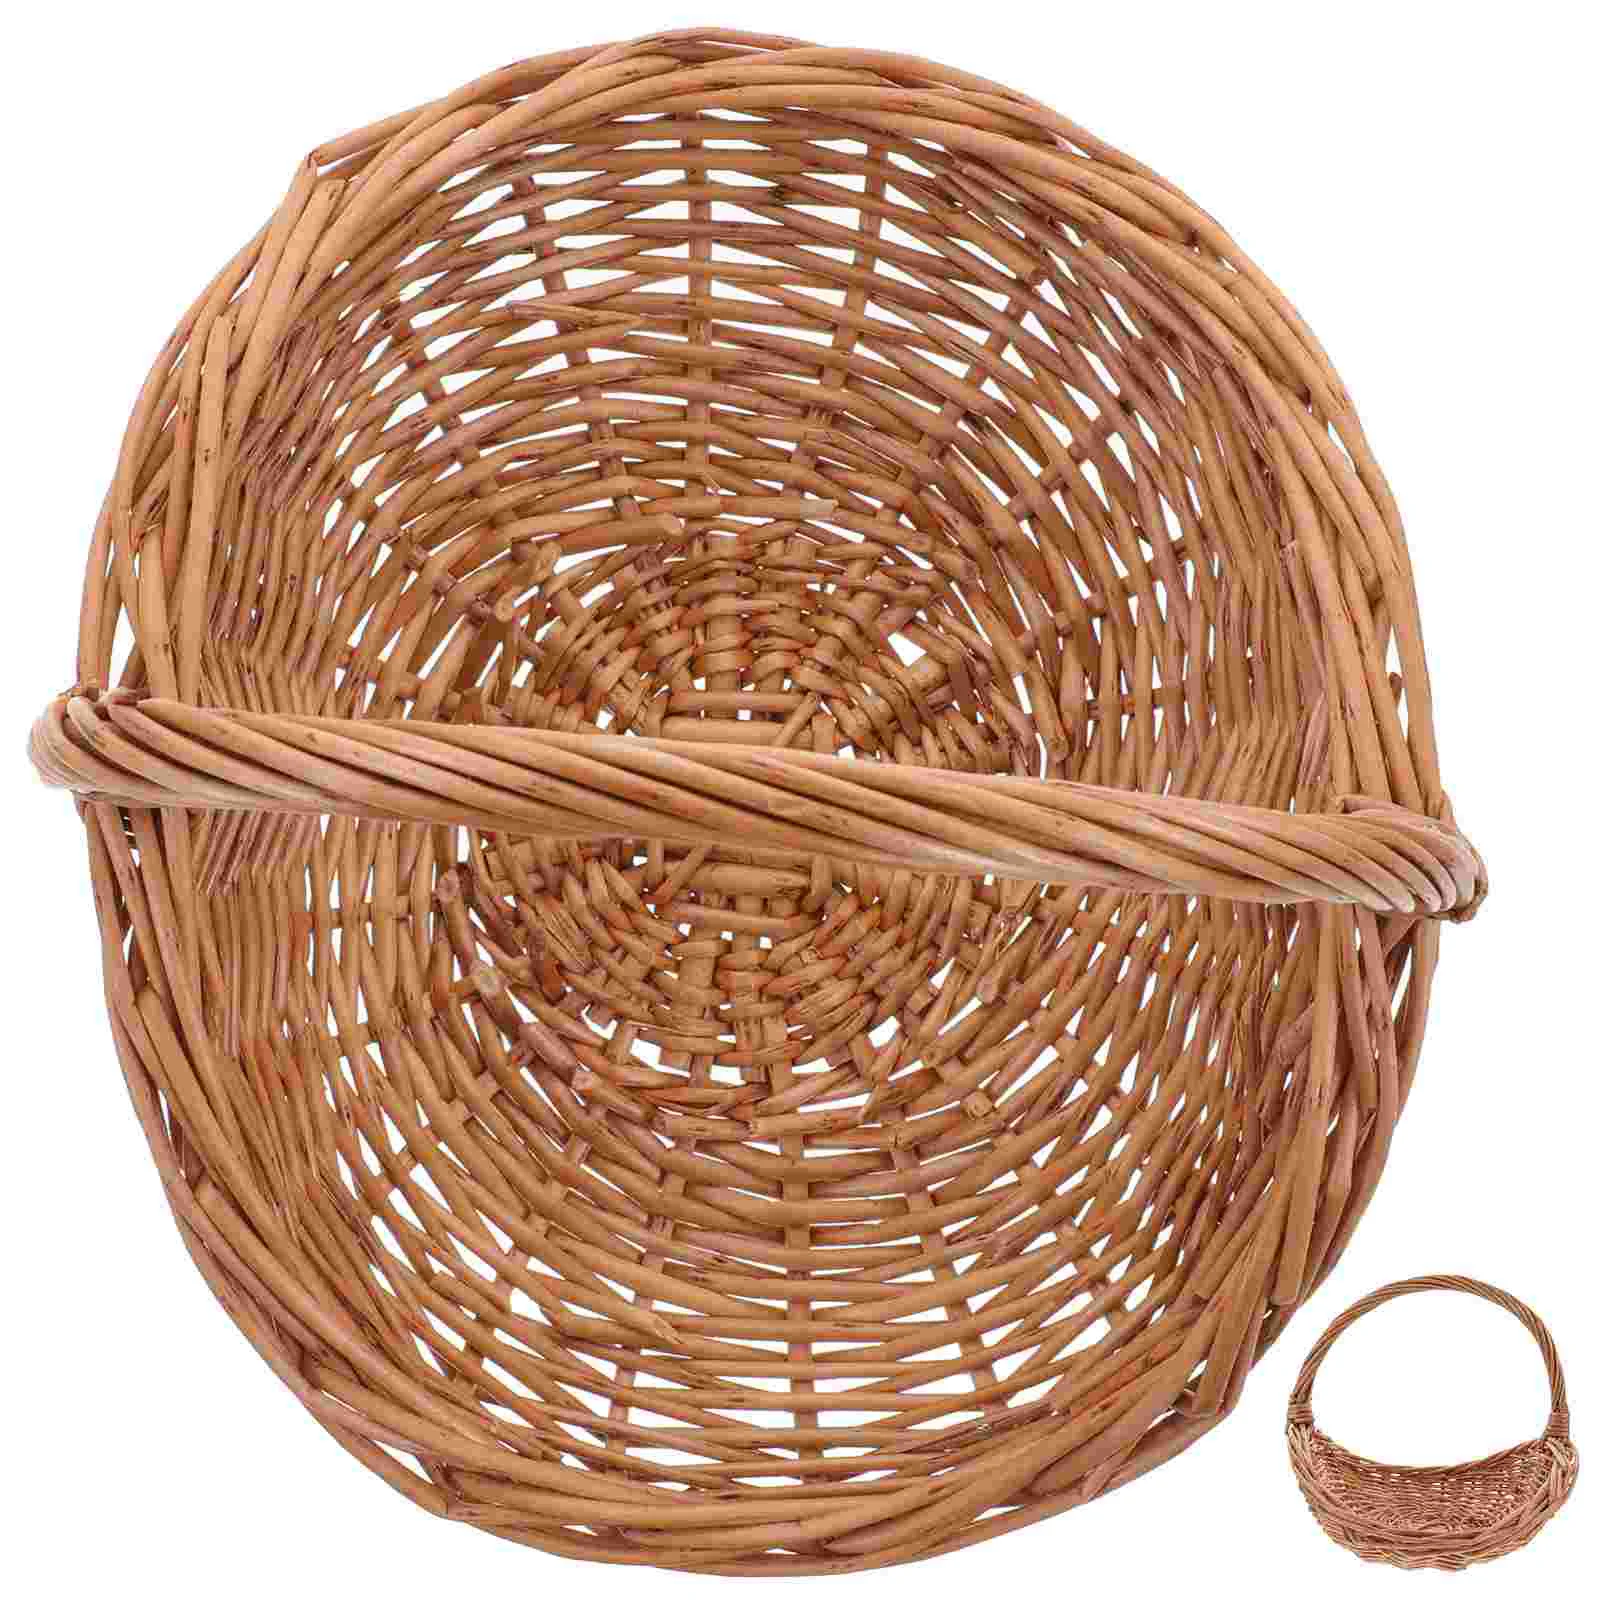 

Wicker Woven Basket Willow Gift Basket Fruit Picnic Easter Candy Serving Basket Handles Rattan Food Storage Basket Wedding